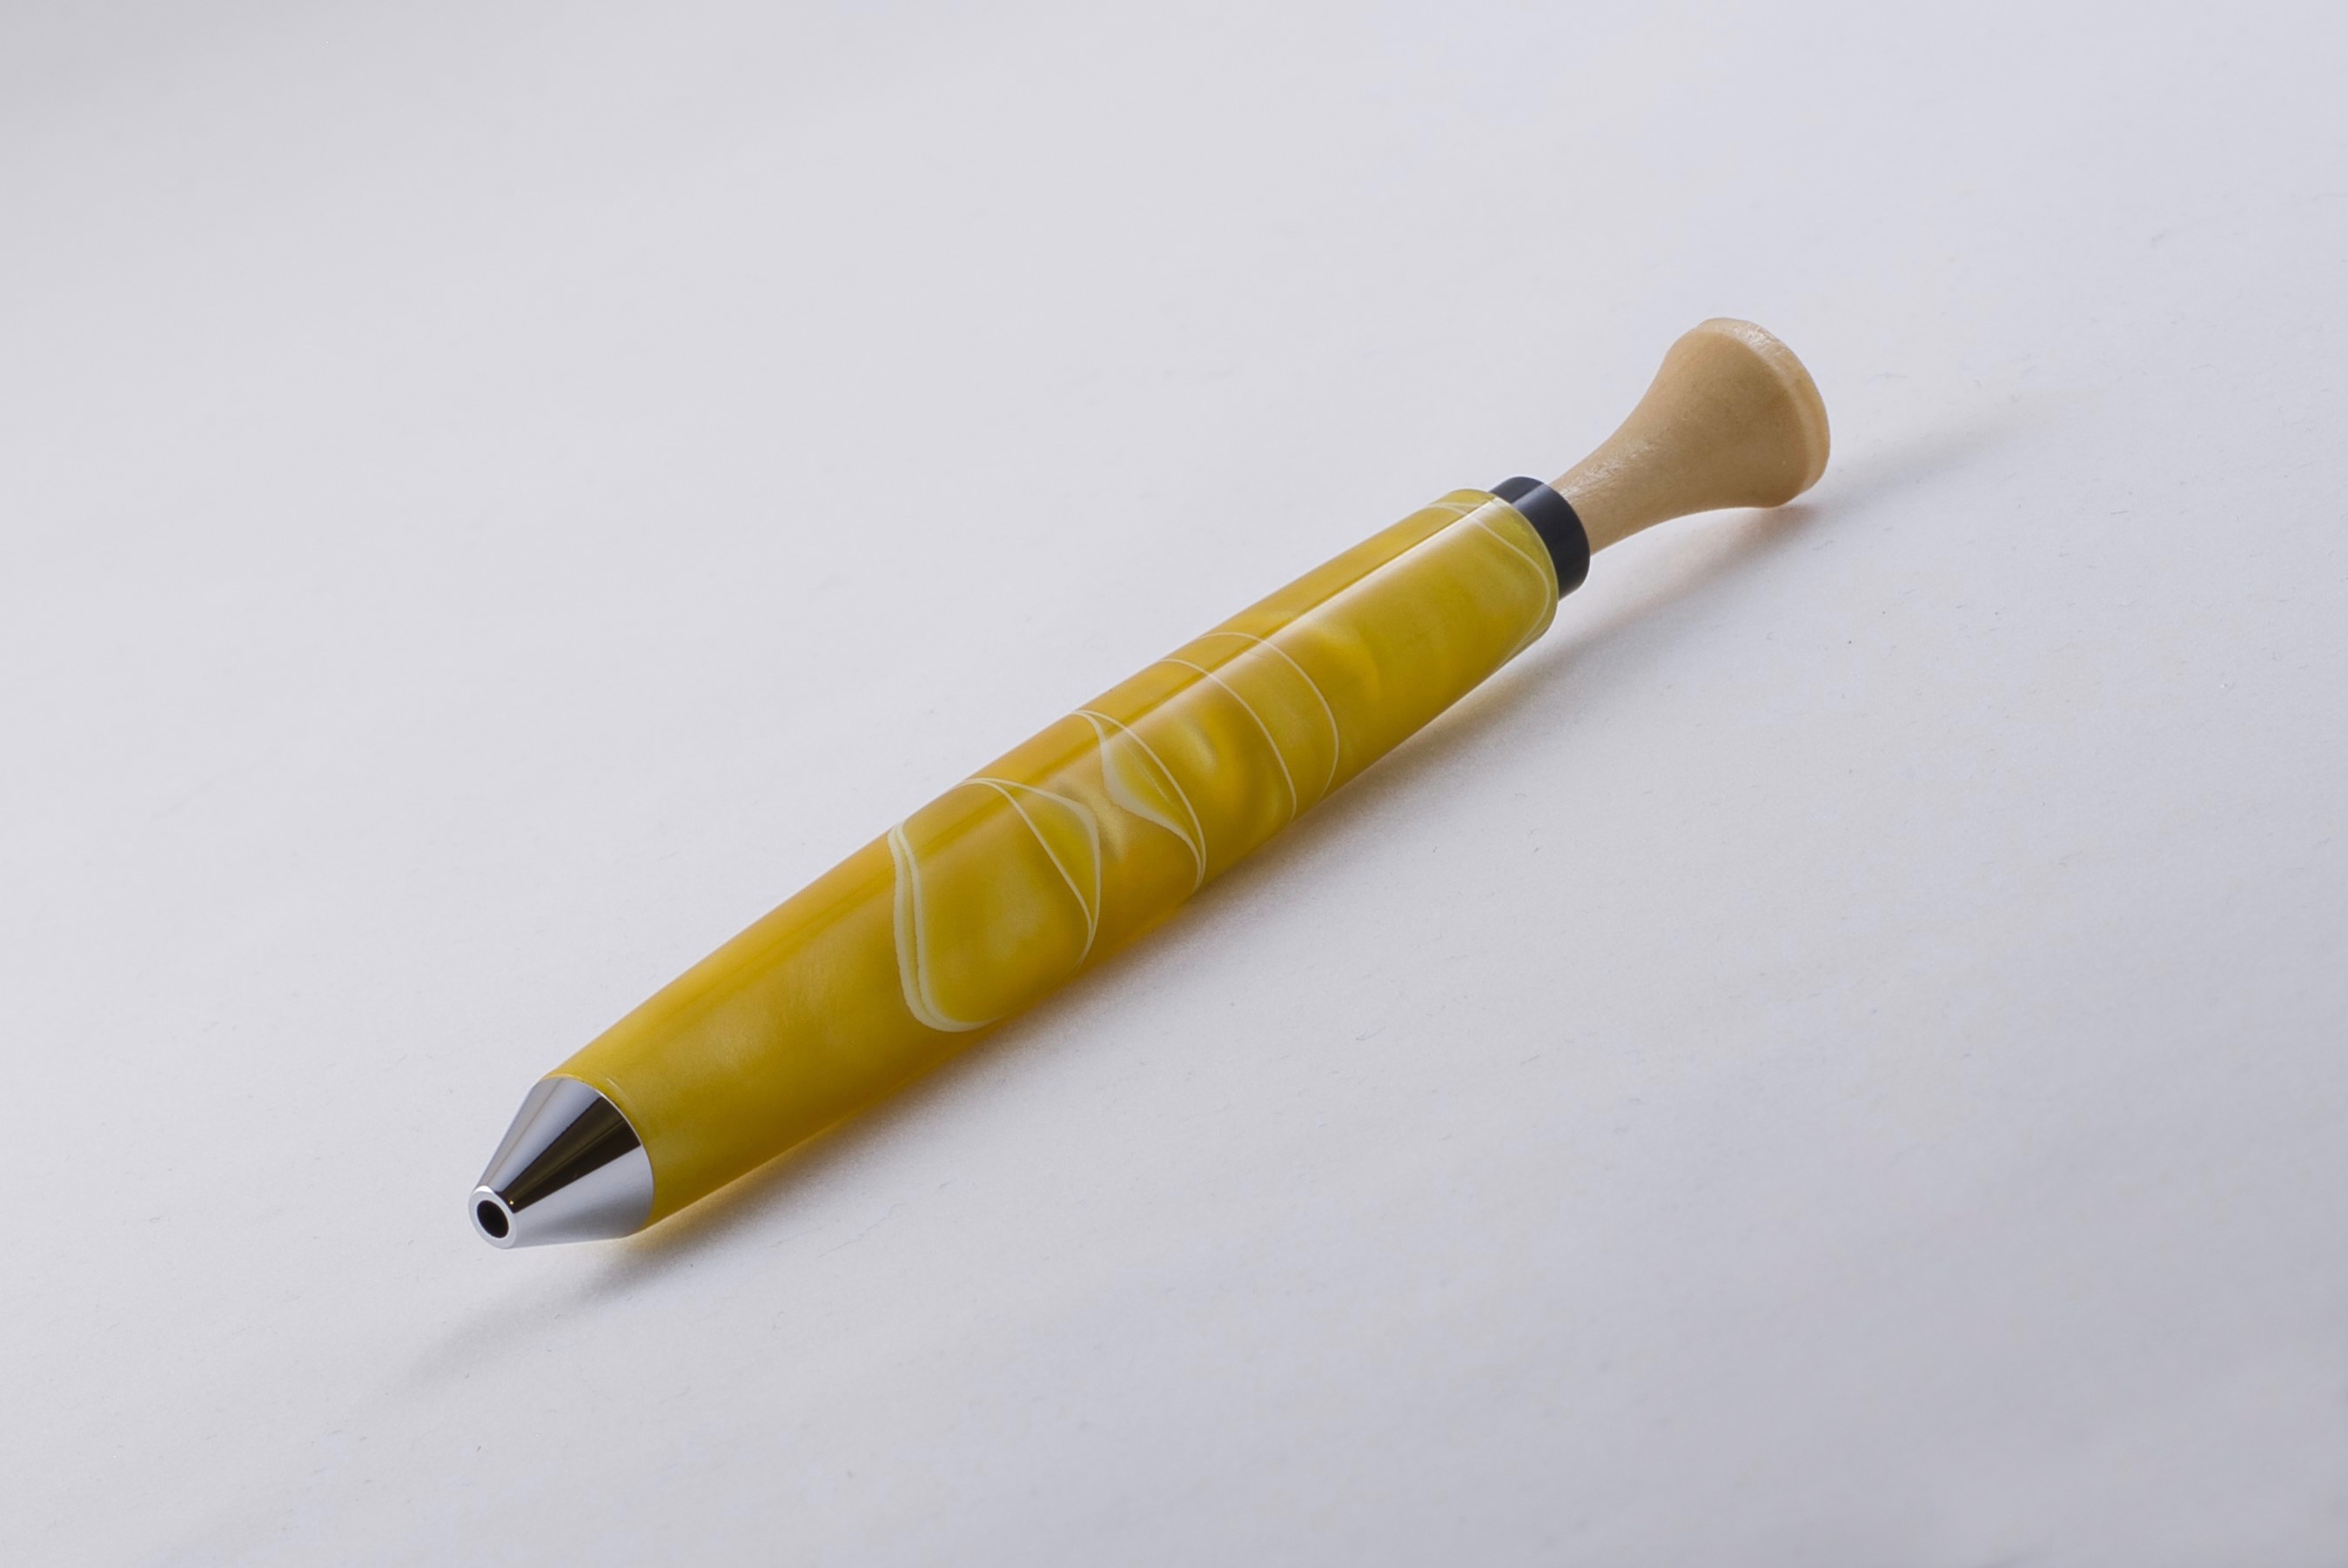 PSI Golf Pencil - Acrylic Lemon.jpg